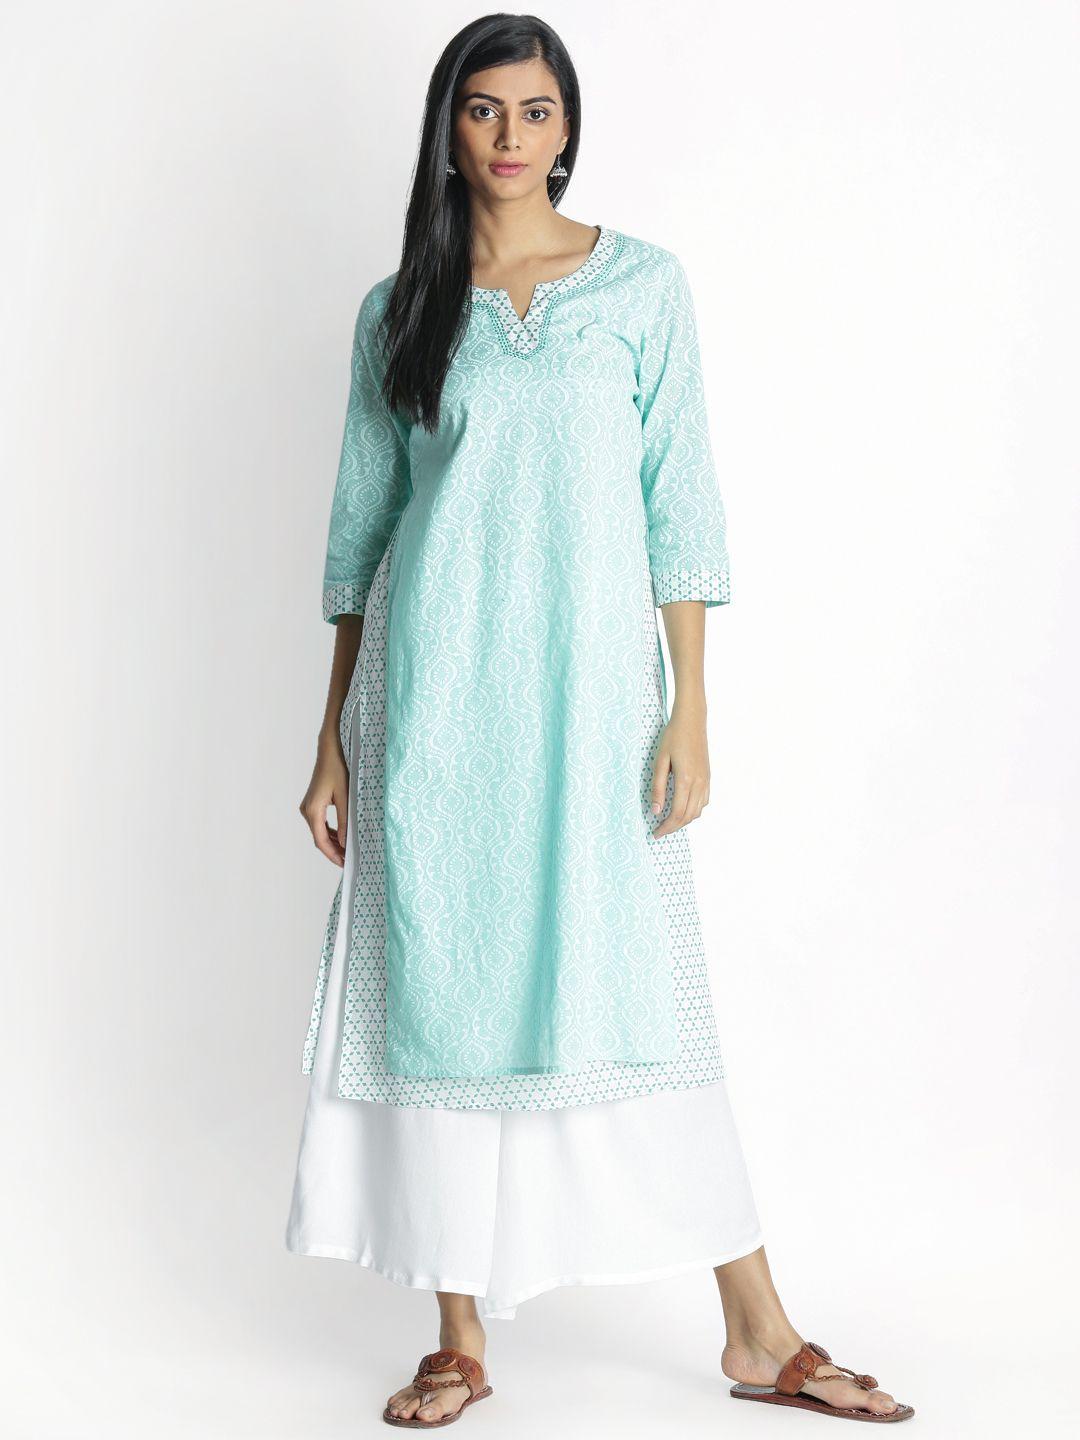 rangmanch by pantaloons women blue & white printed layered kurta